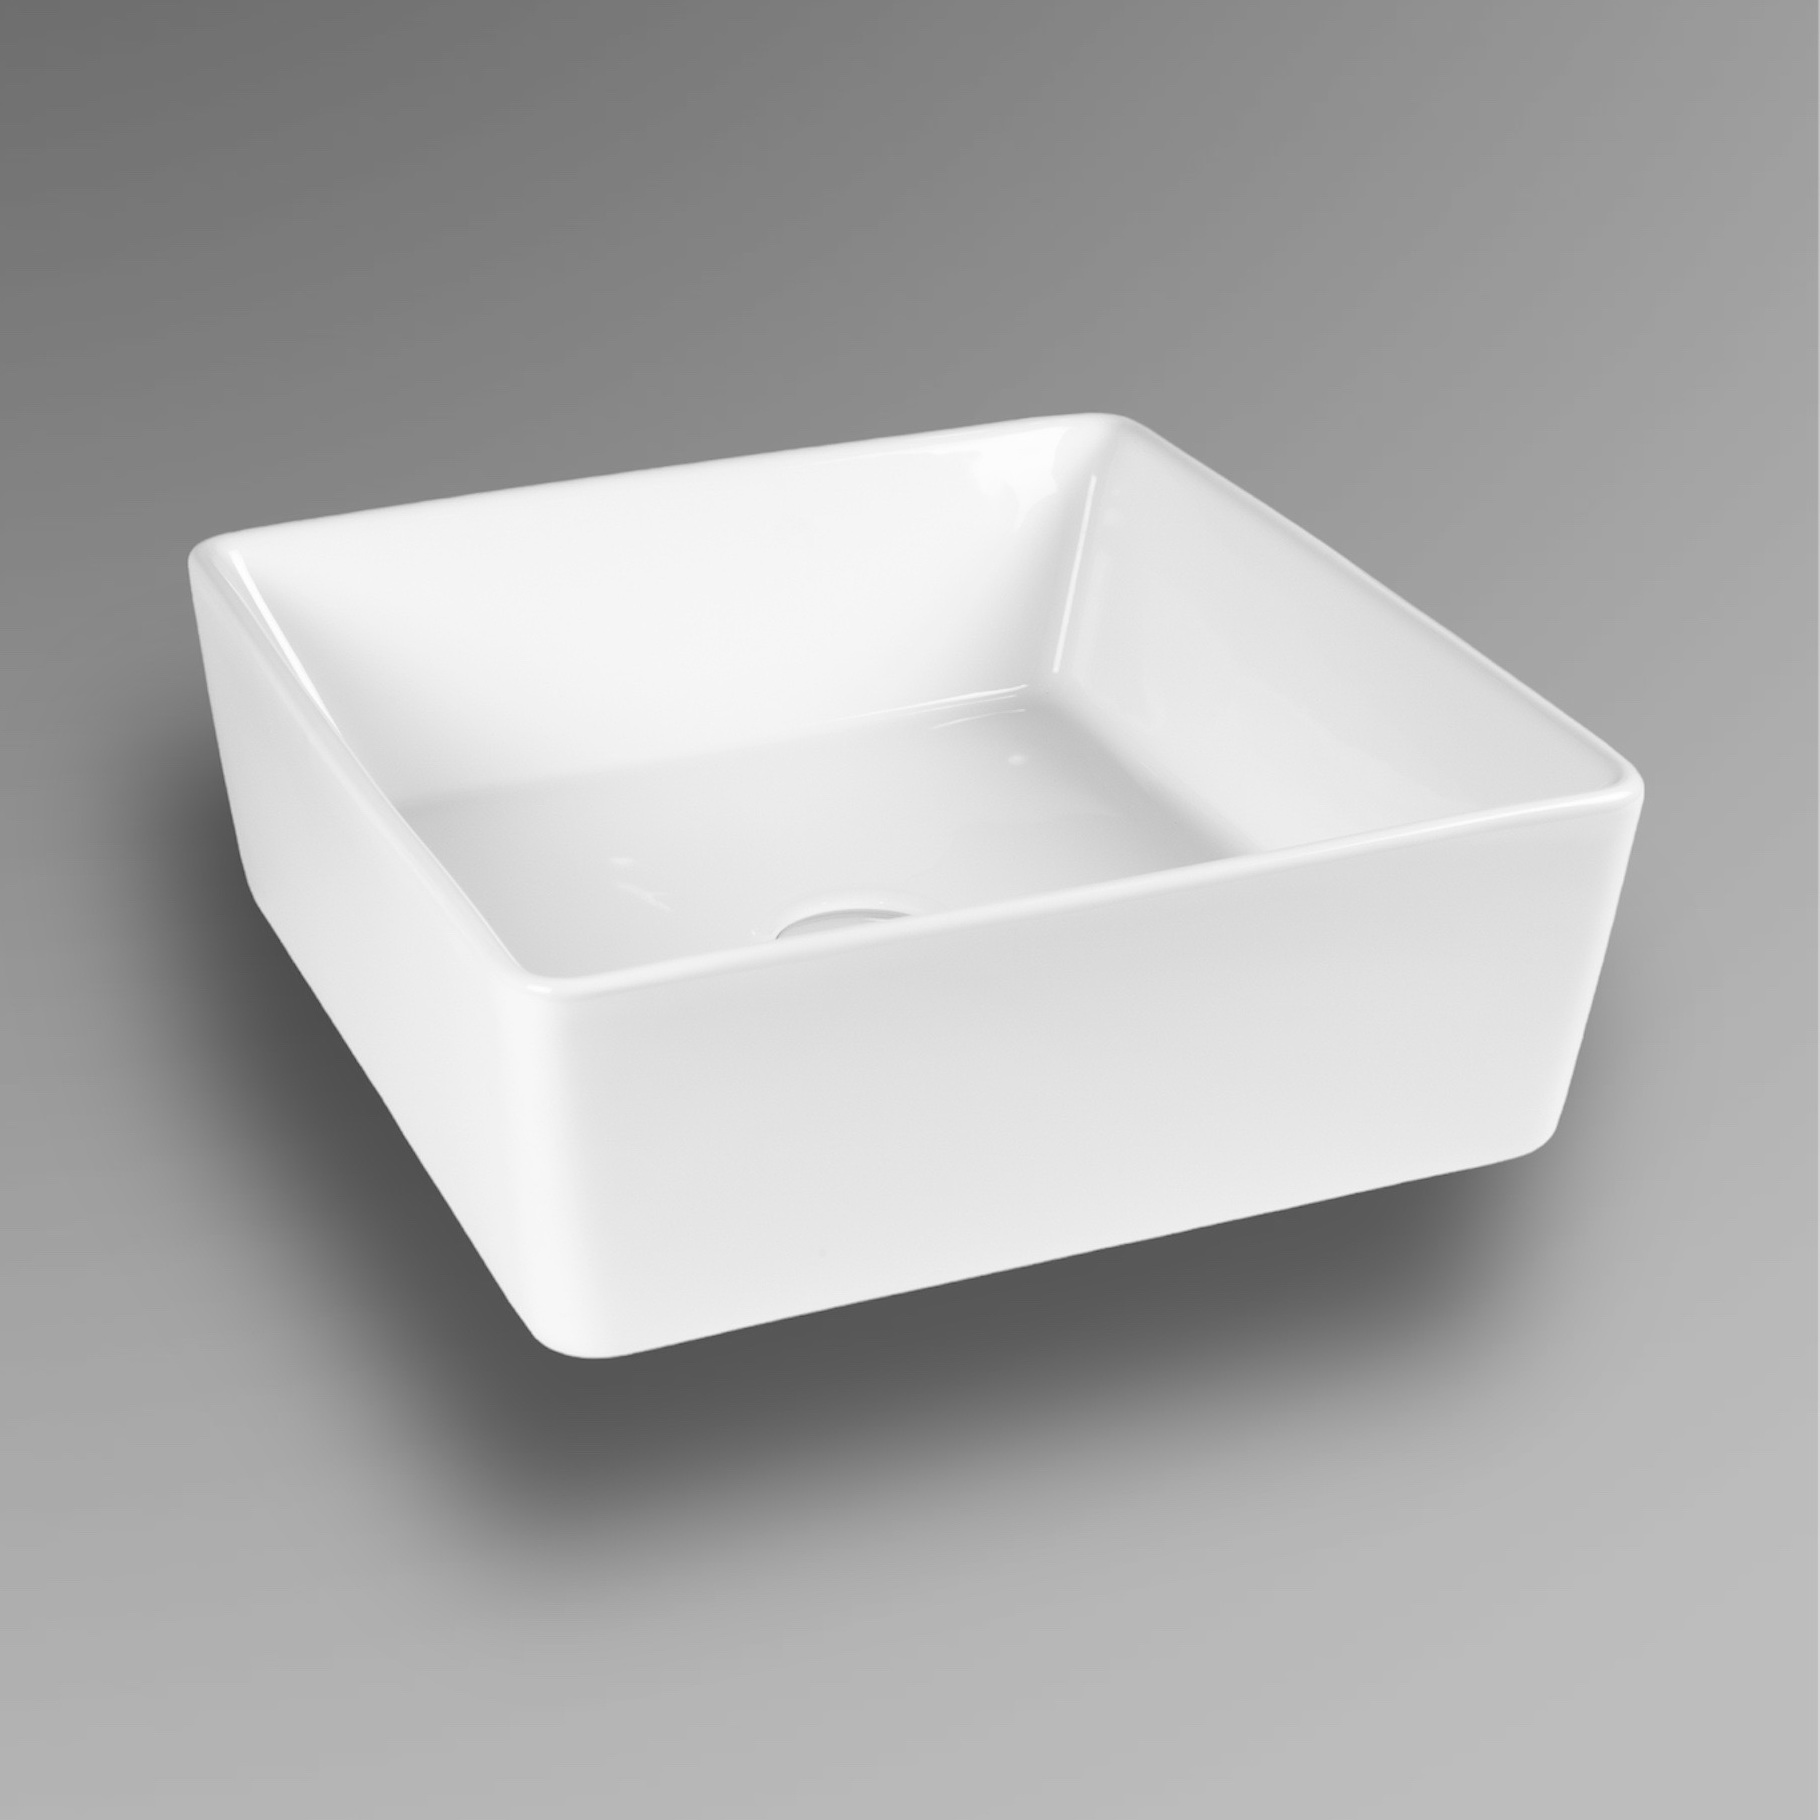 Раковина накладная Bond Cube 40 см S54-390 белая, цвет белый - фото 2